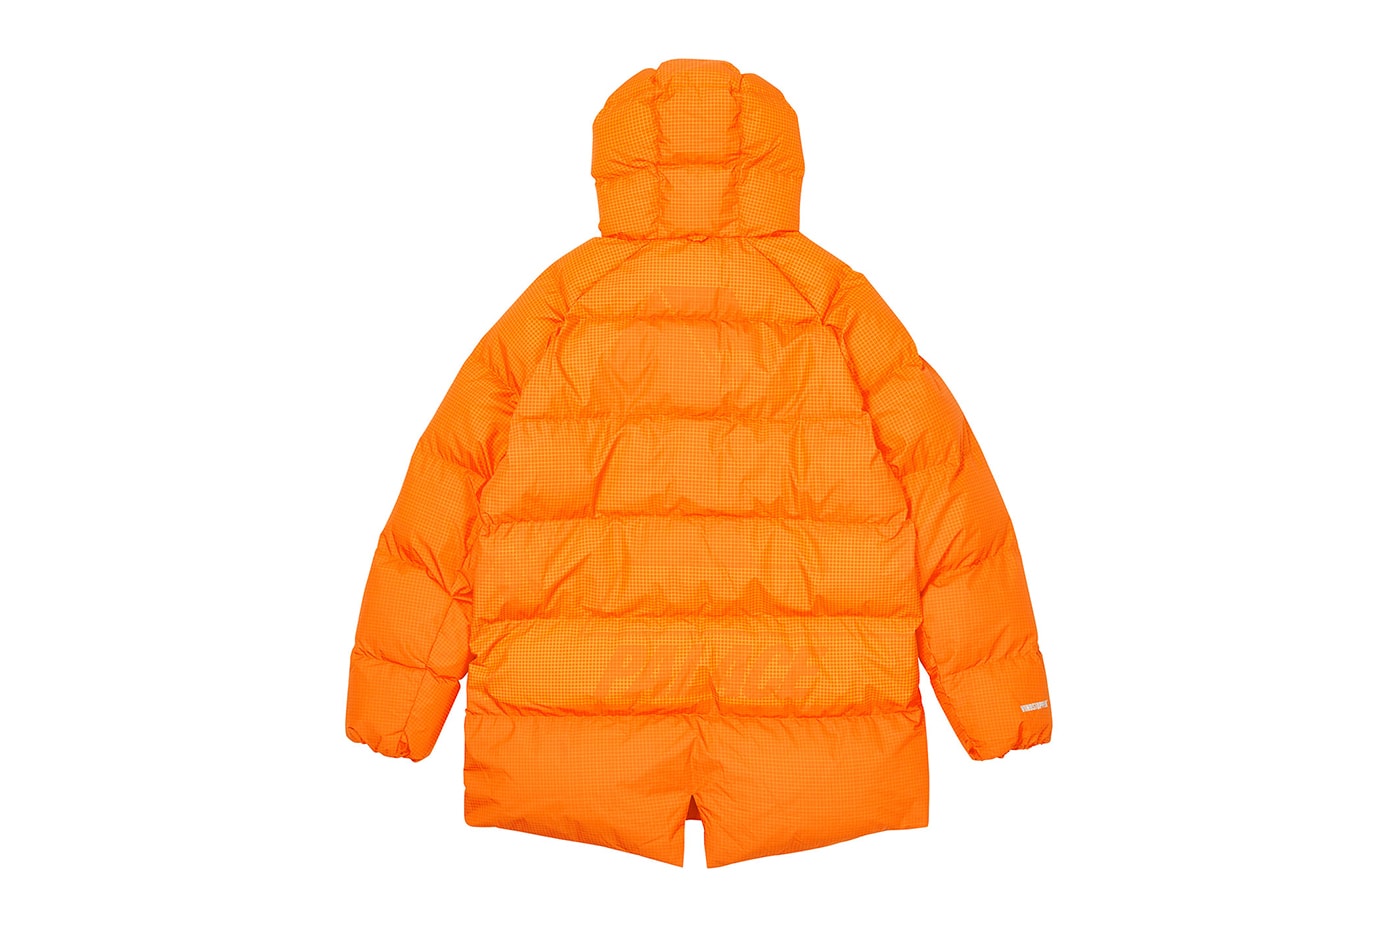 Palace Winter 2020 Jackets outerwear collection drop info gore-tex outerwear coats jackets wool sherpa fleece winter gold waterproof 